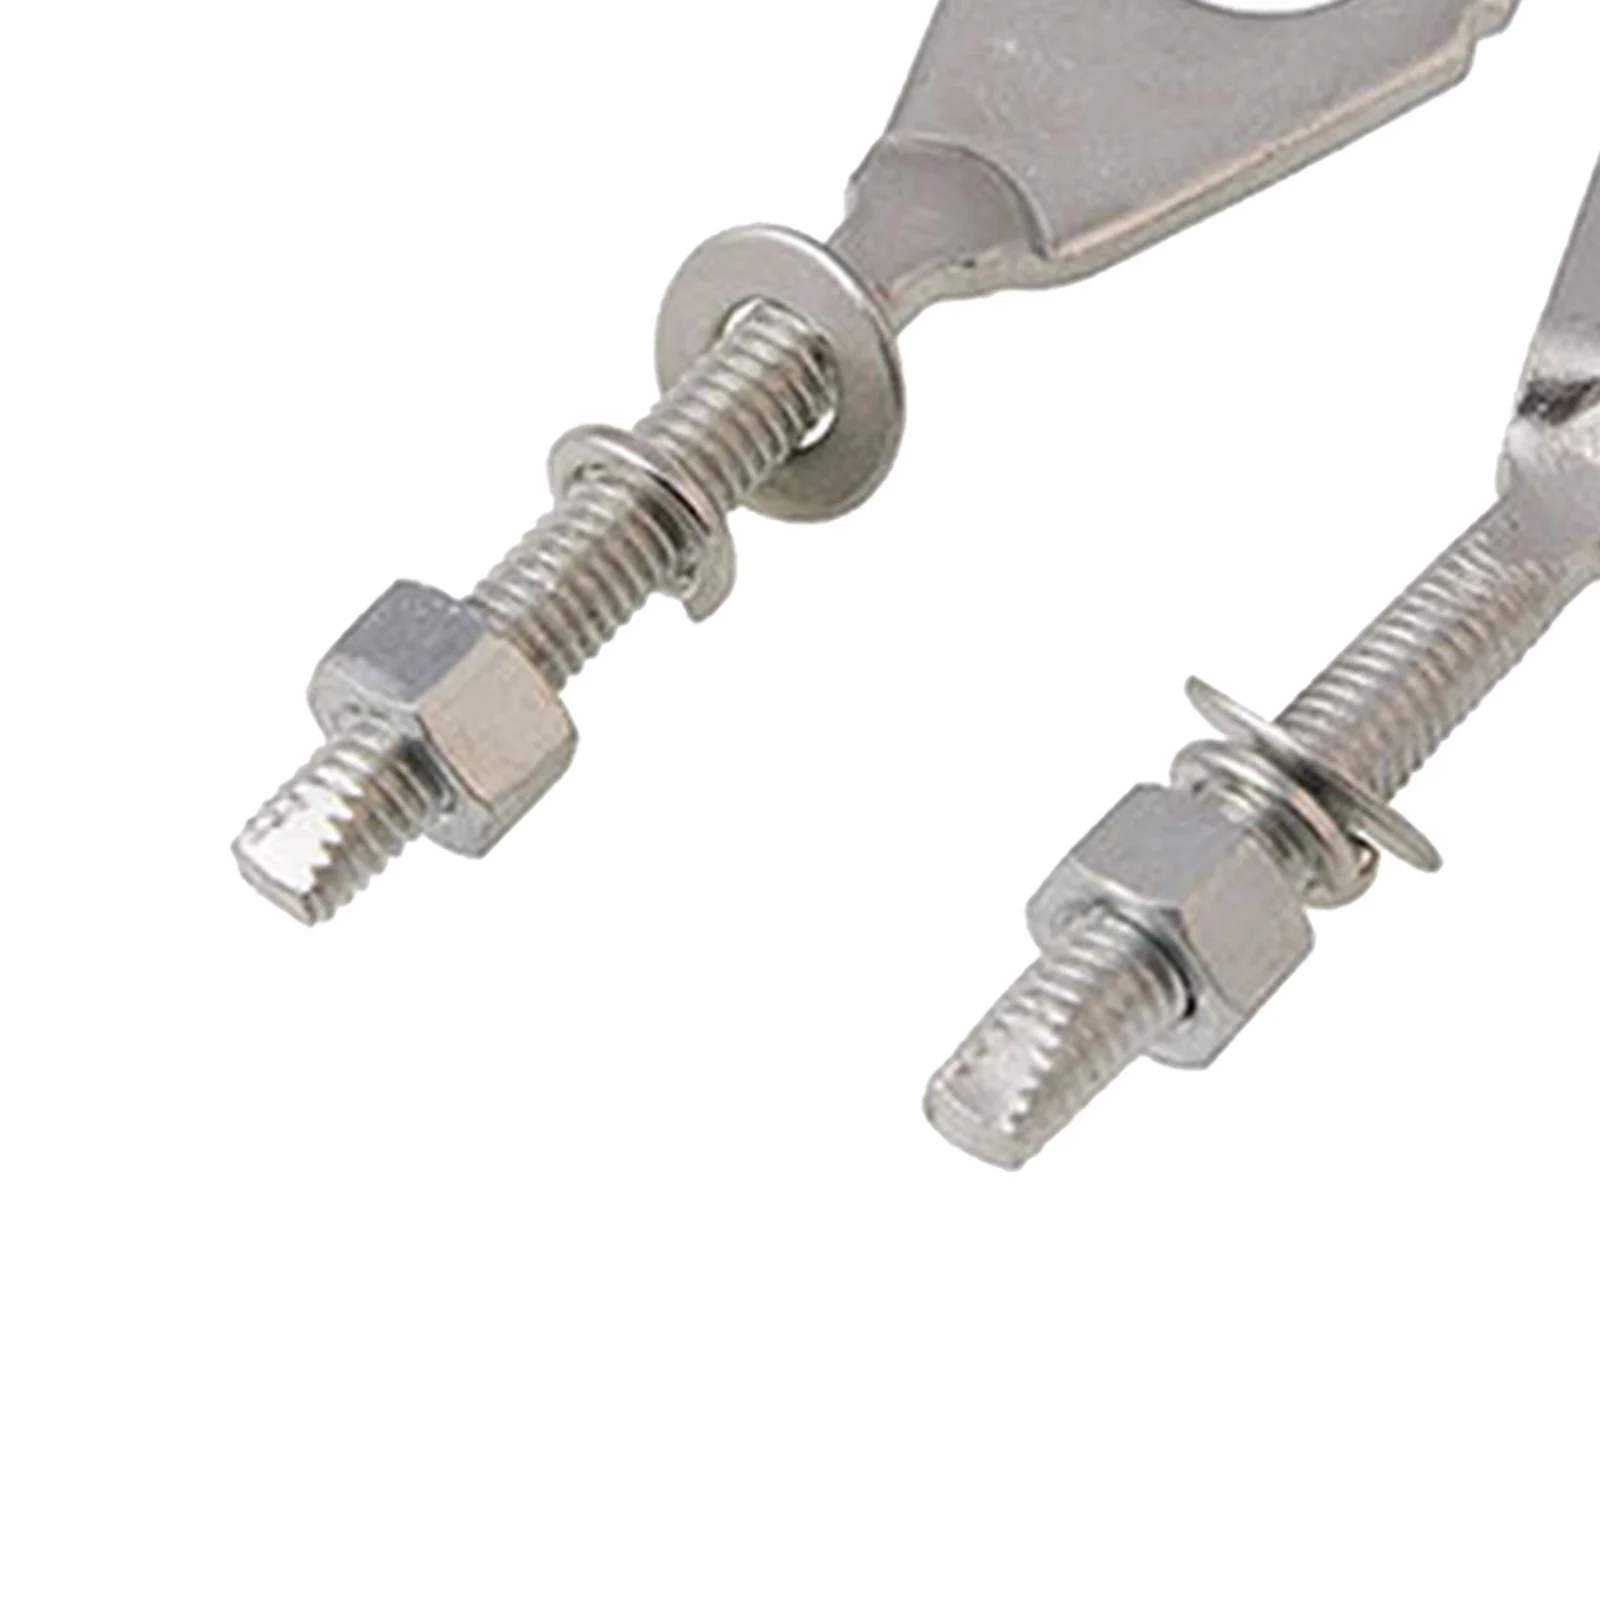 2x Rear Chain Adjuster Tensioner Set For Honda CRF CRF50 XR50 95014-10010